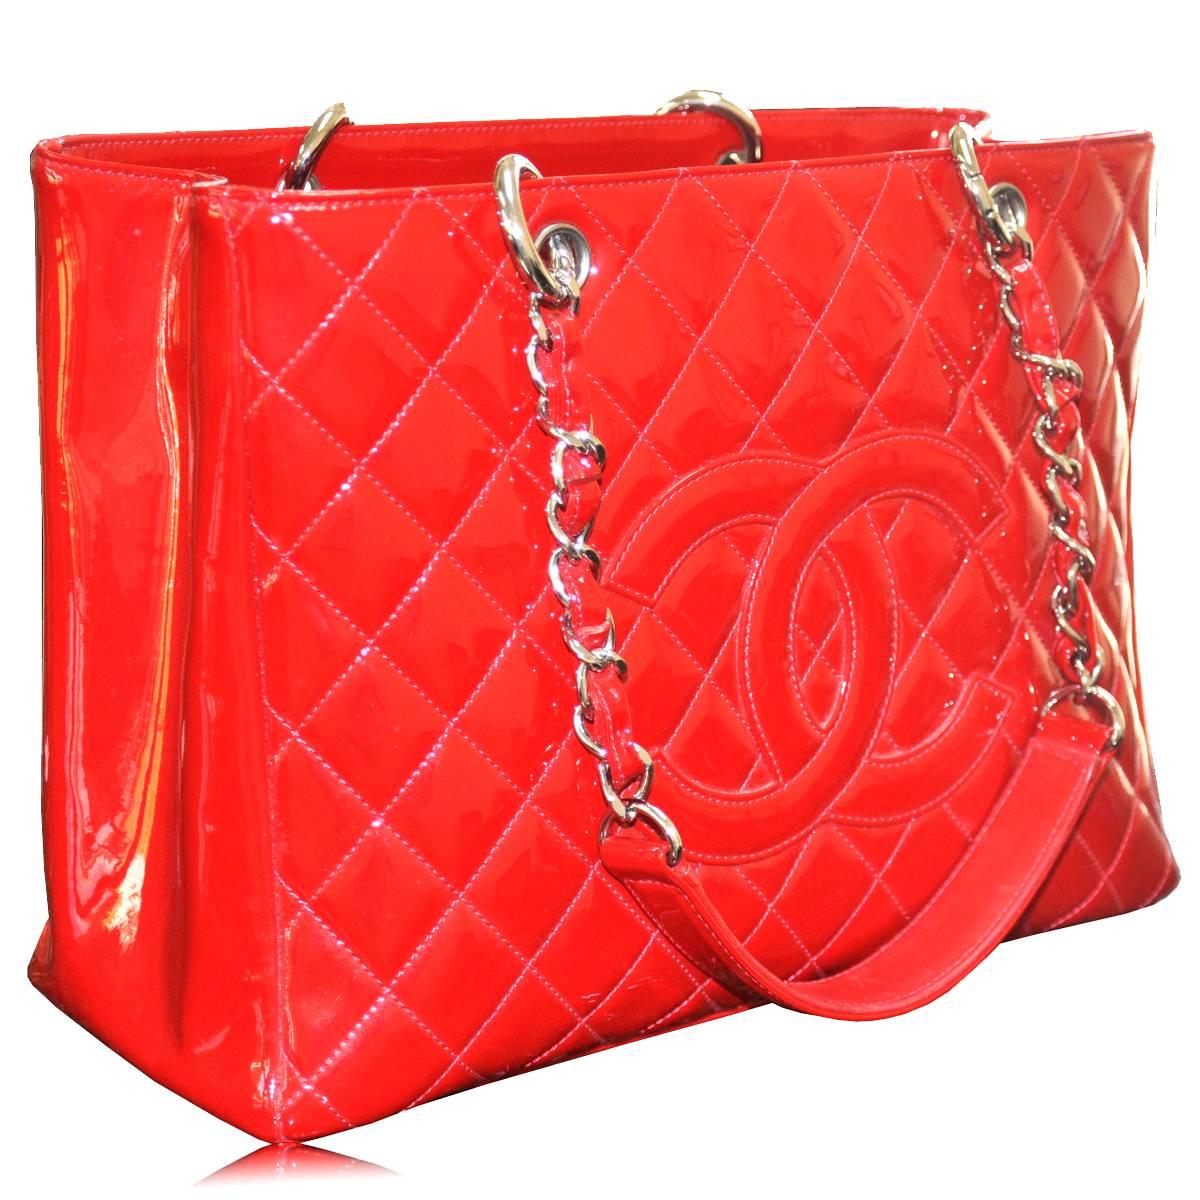 Chanel Red Patent Leather Grand Shopper Tote GST Handbag 3